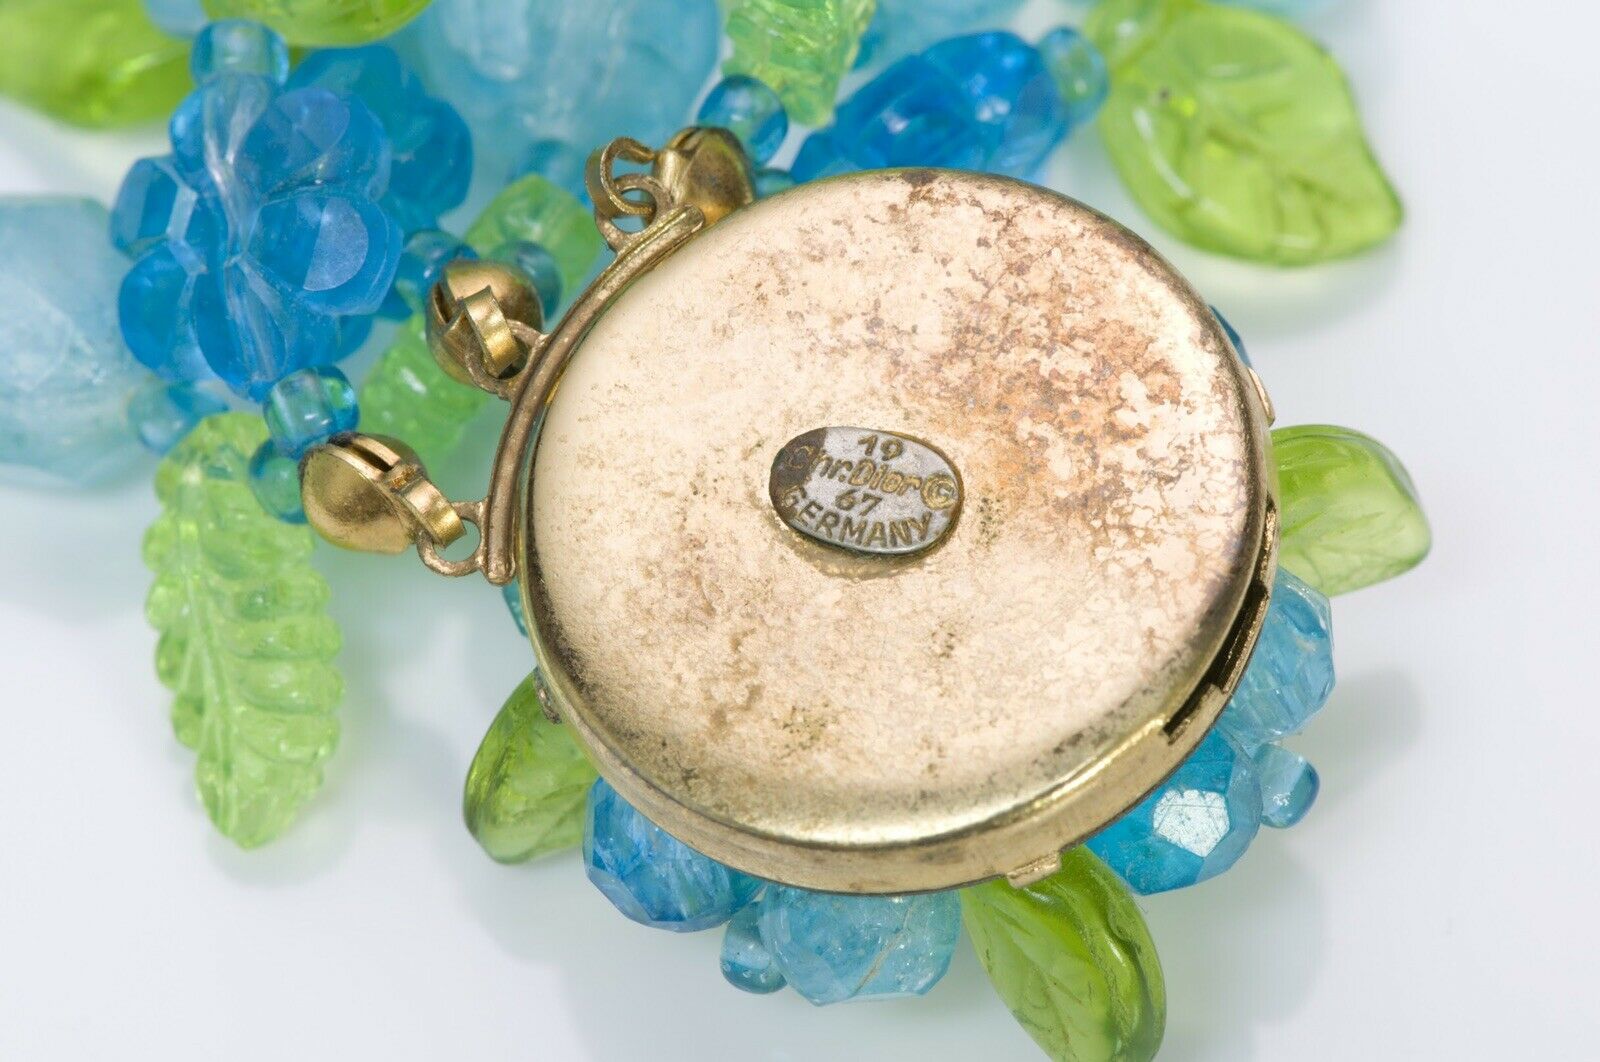 Christian DIOR Henkel Grosse 1967 Blue Beads Necklace